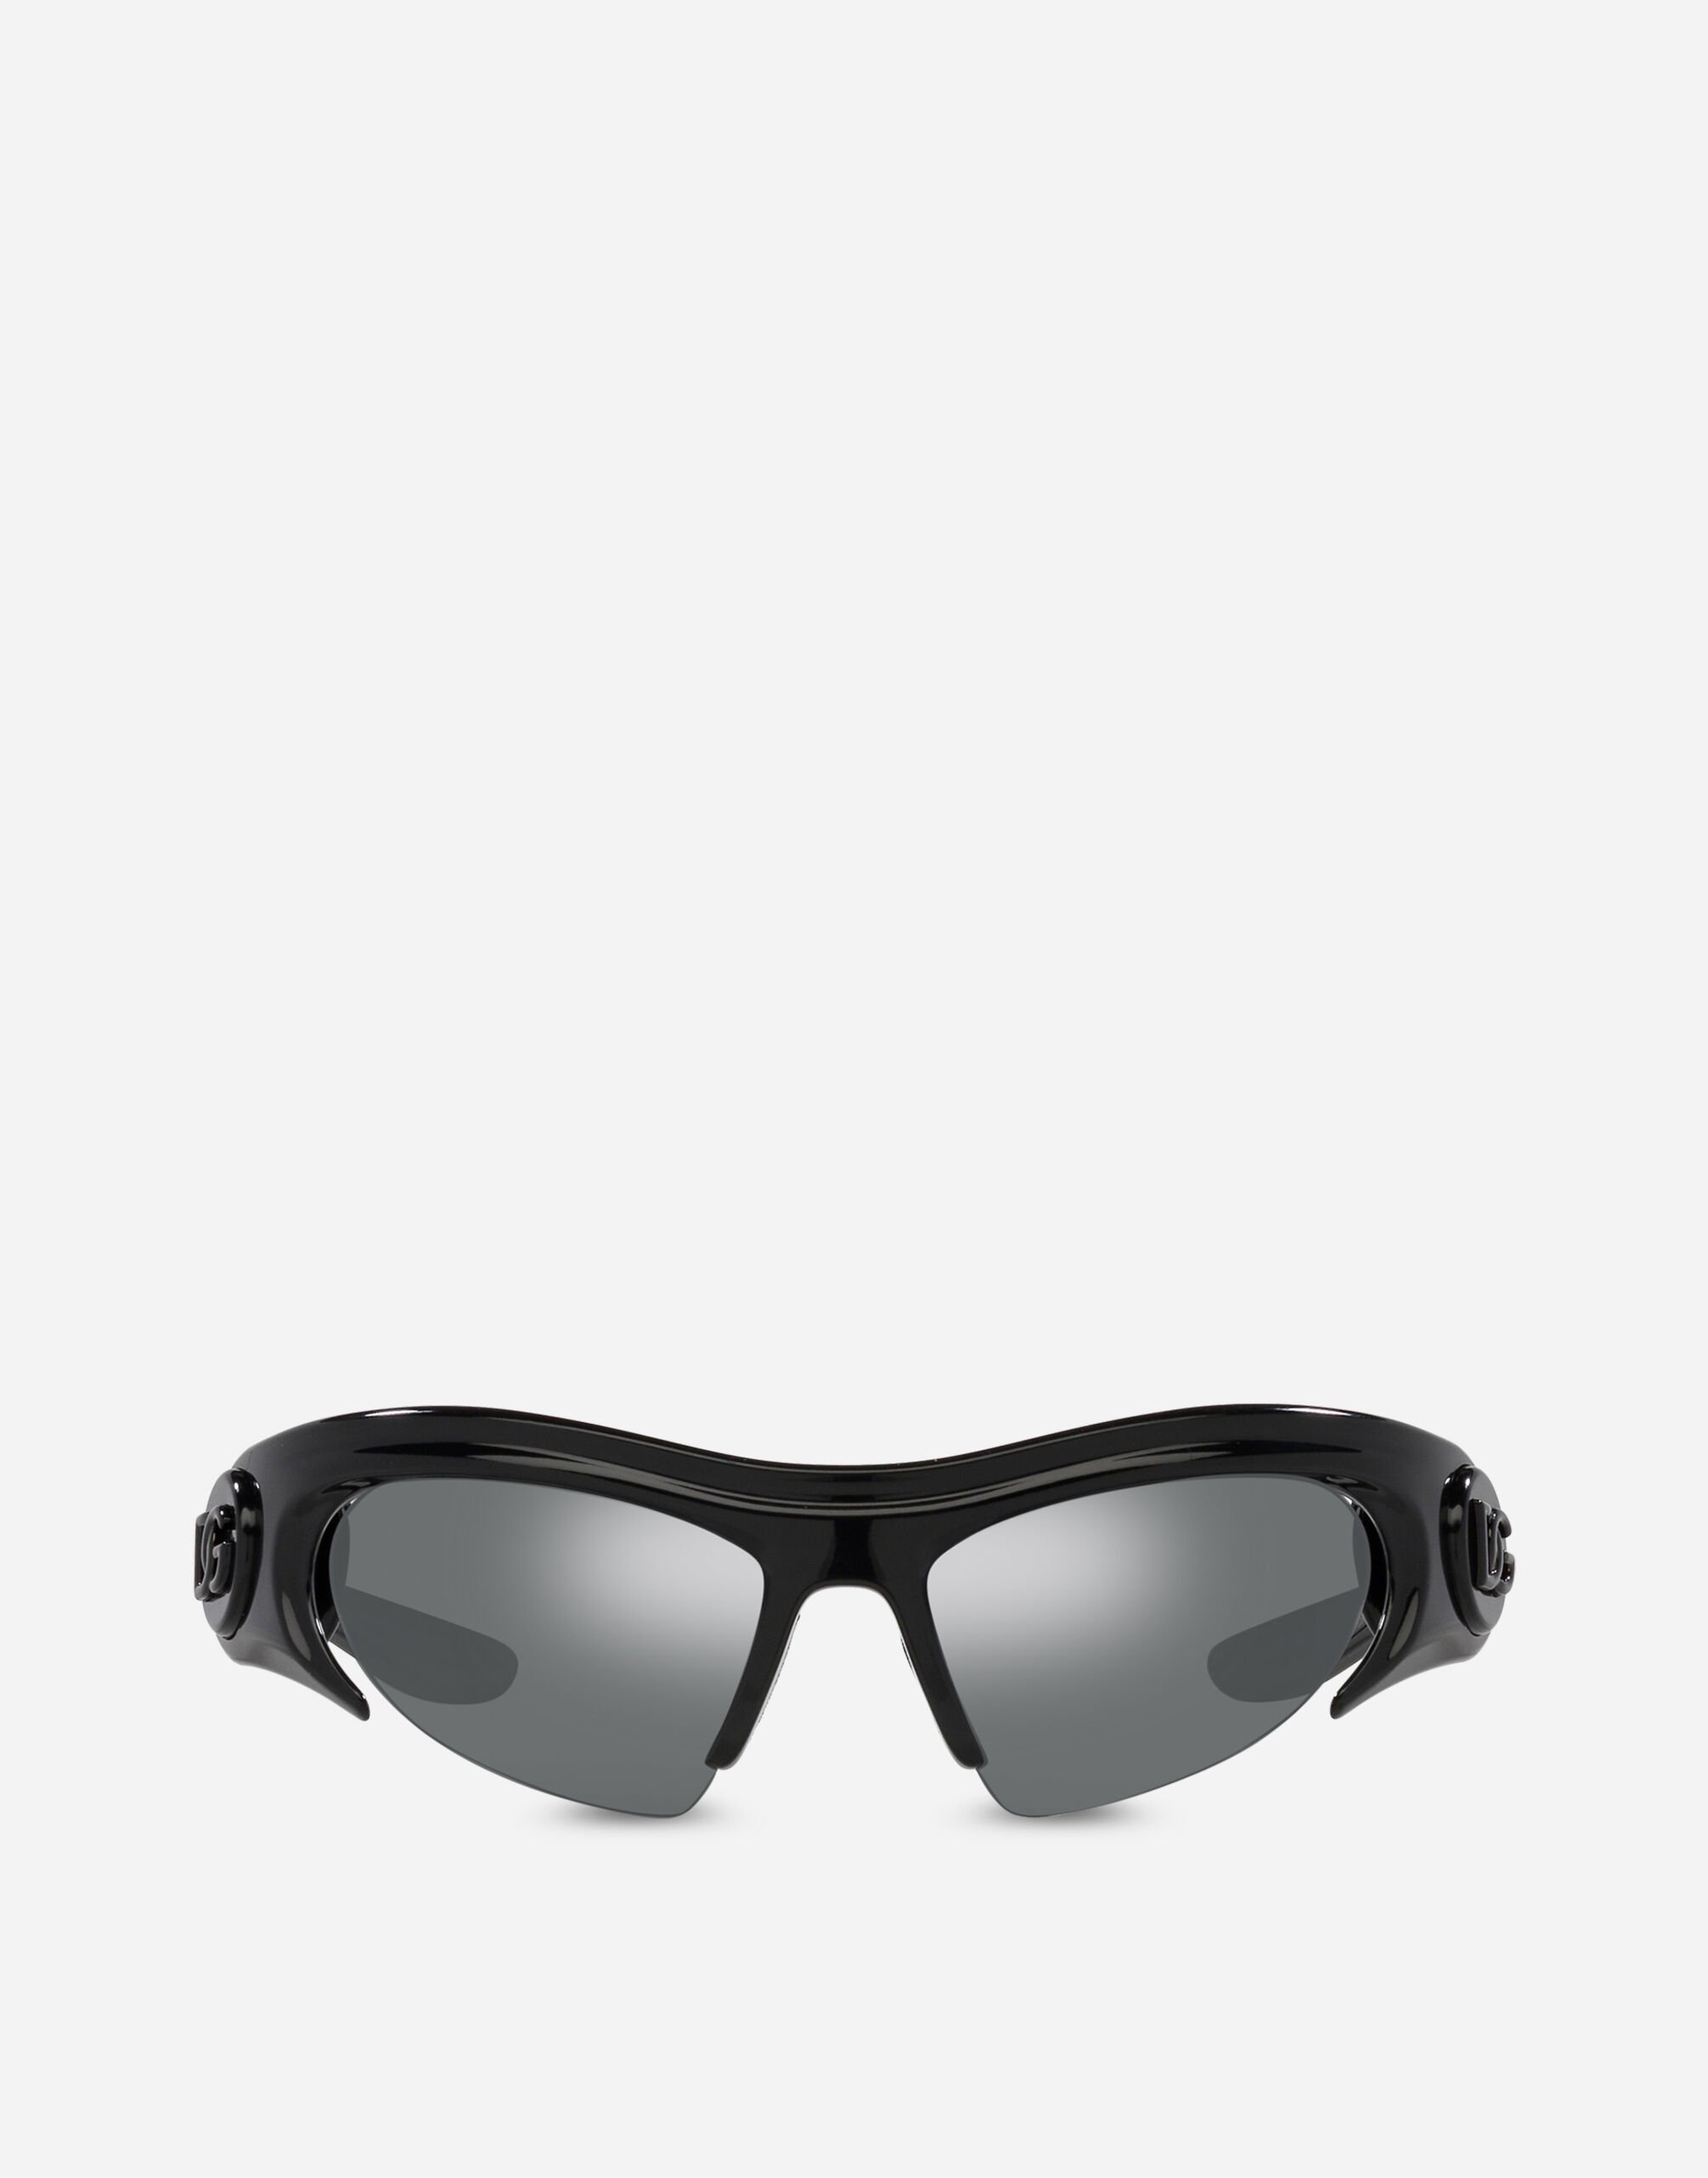 Dolce & Gabbana DG Toy sunglasses Black VG447AVP187